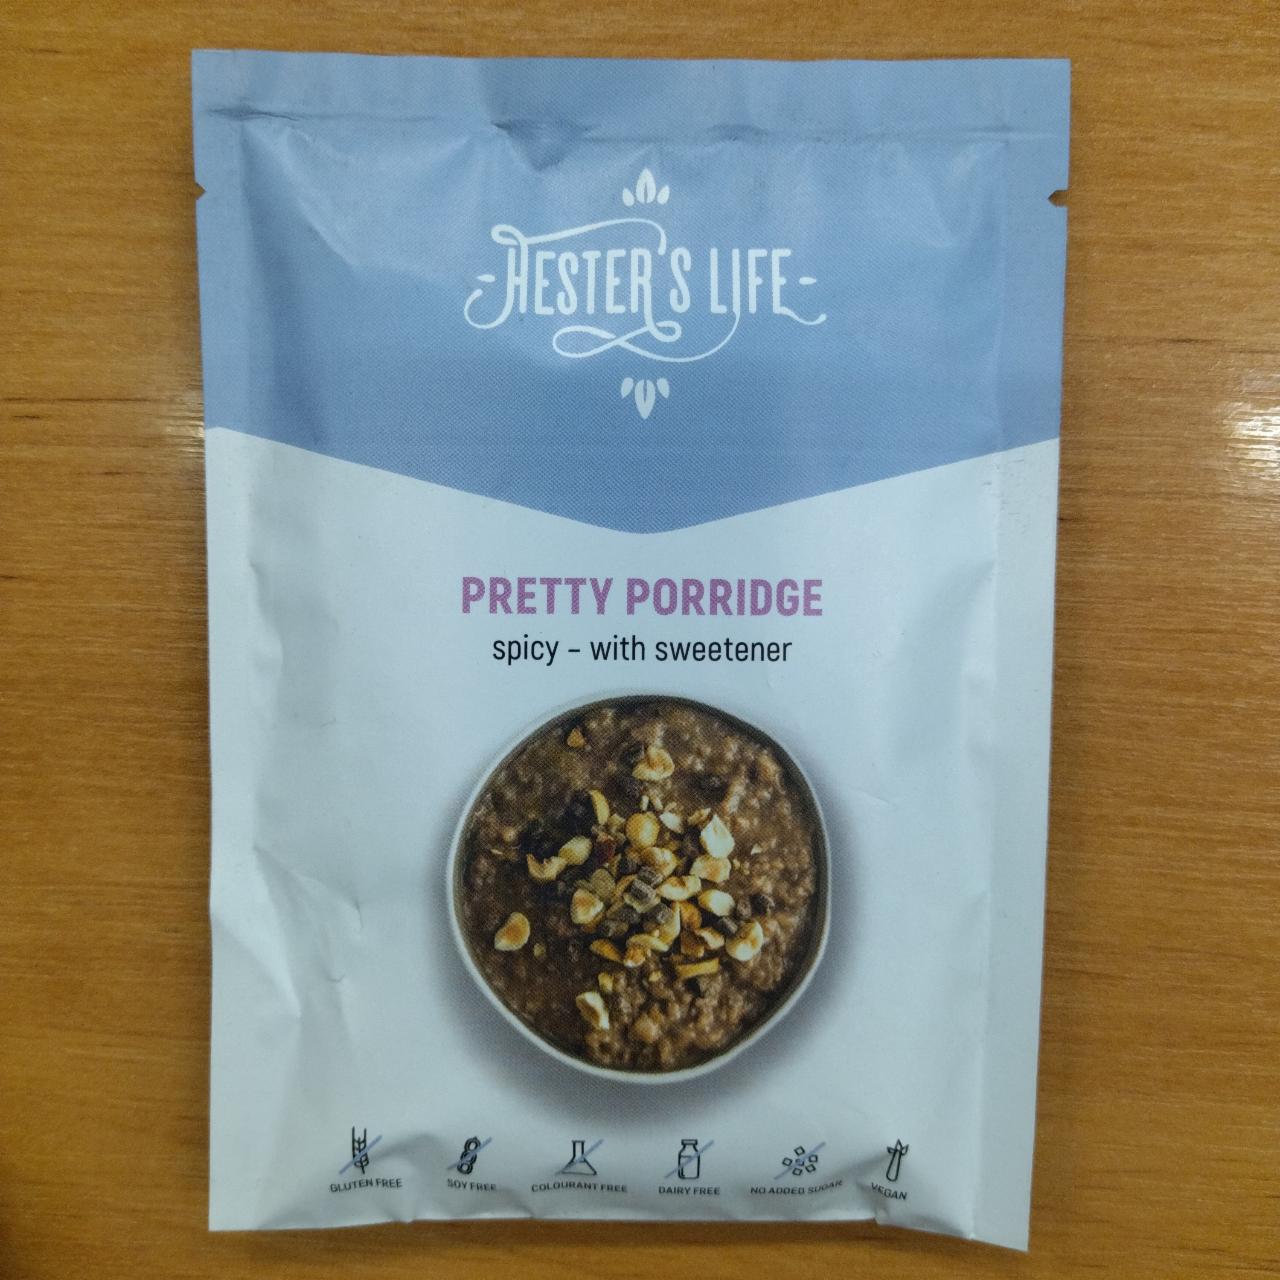 Fotografie - Pretty porridge spicy with sweetenr Hester's Life